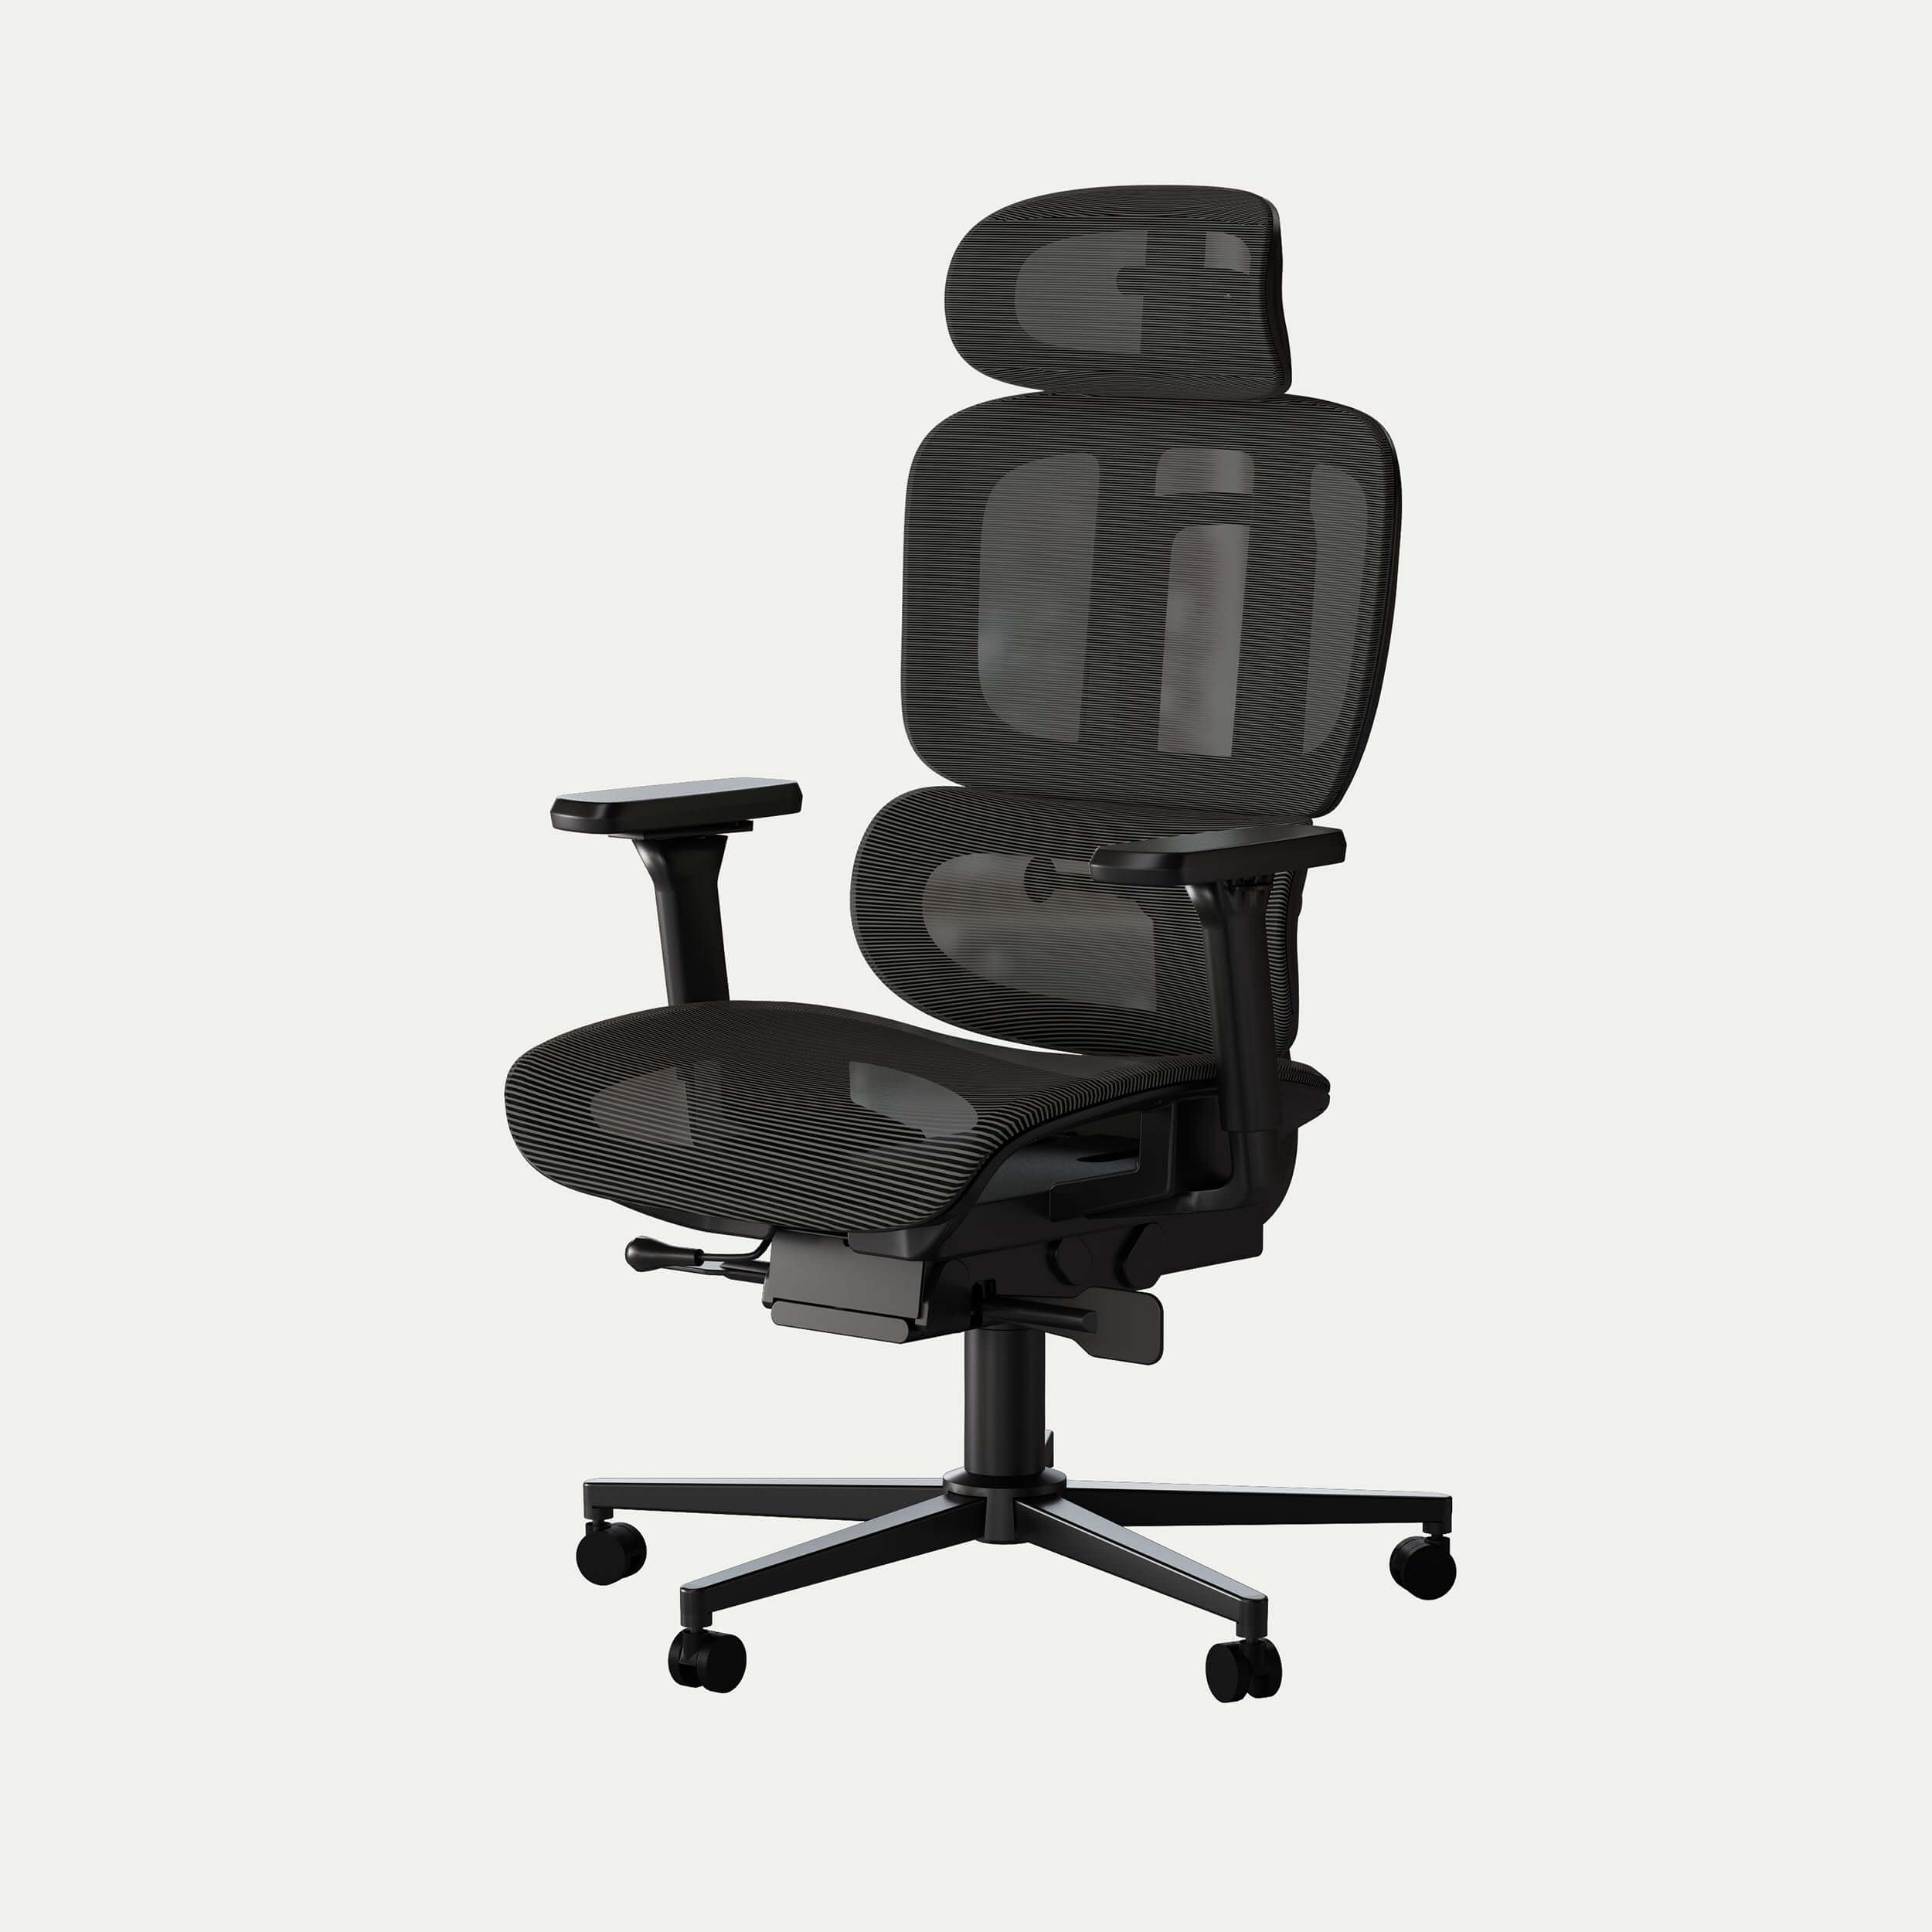 Maidesite ergonomic office chair black for home office